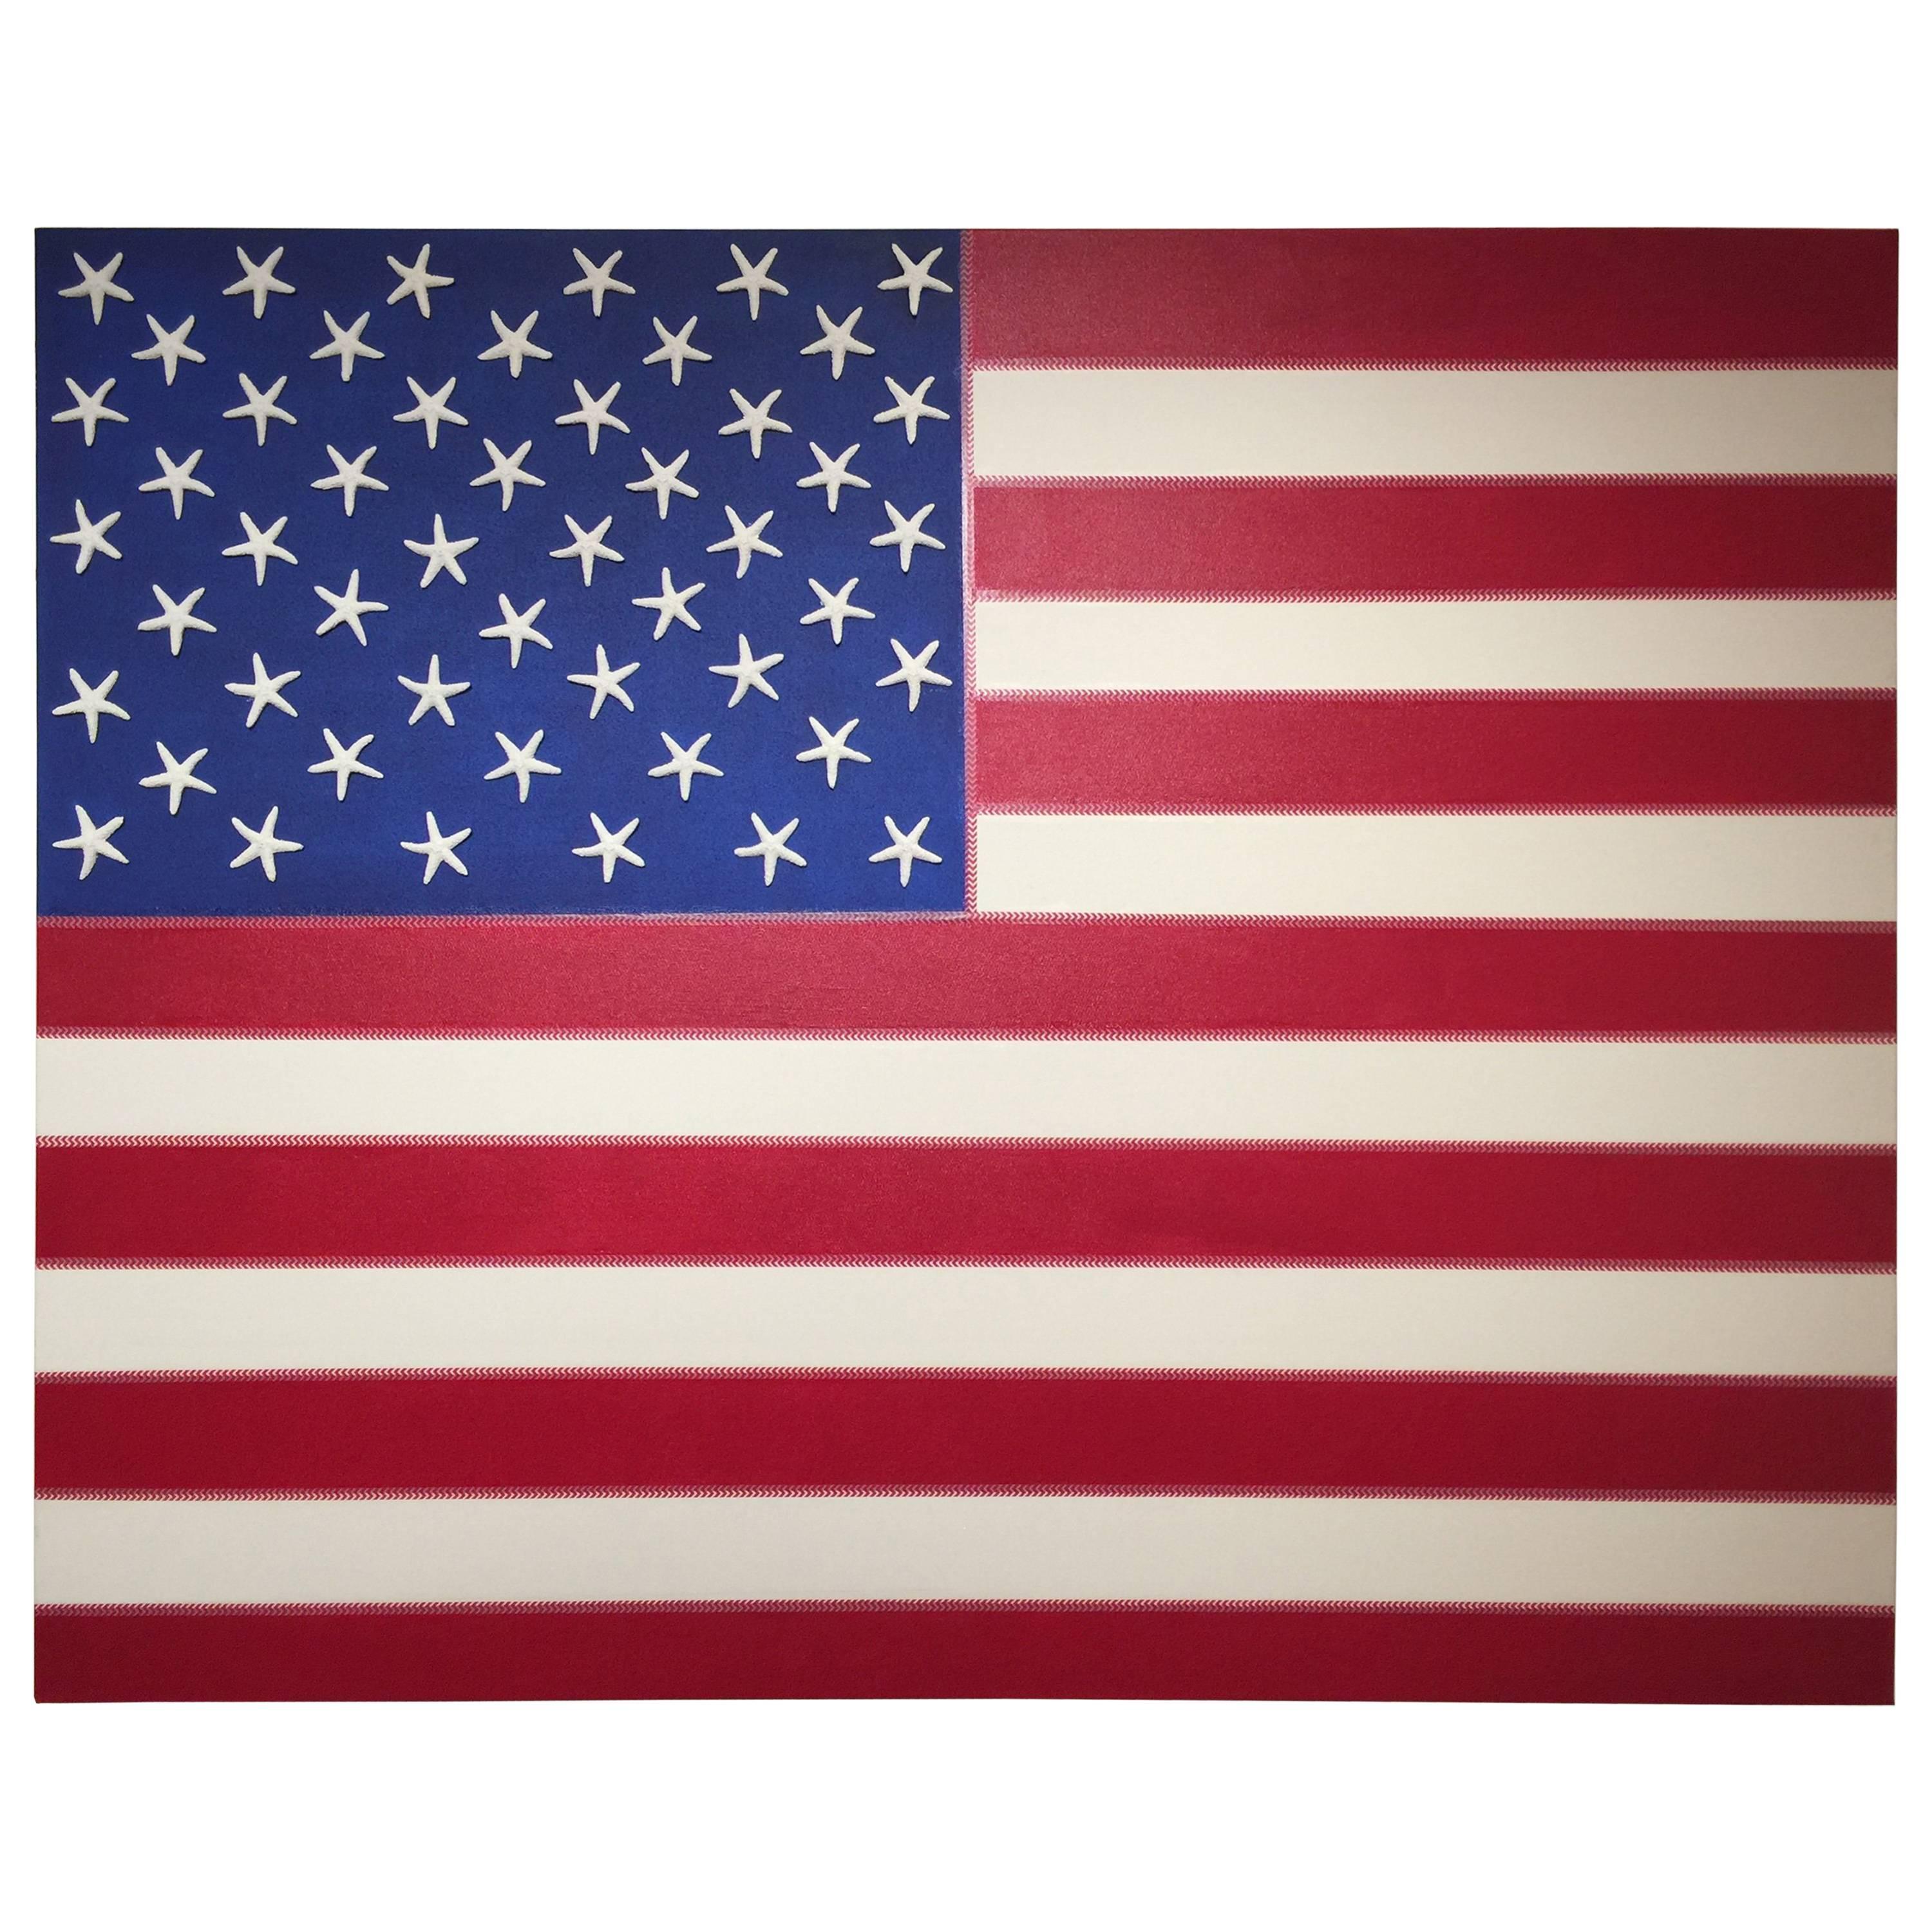 J. WOHNSEIDLER Amerikanische Flagge Nr. 1, 2017 Acryl auf Leinwand im Angebot